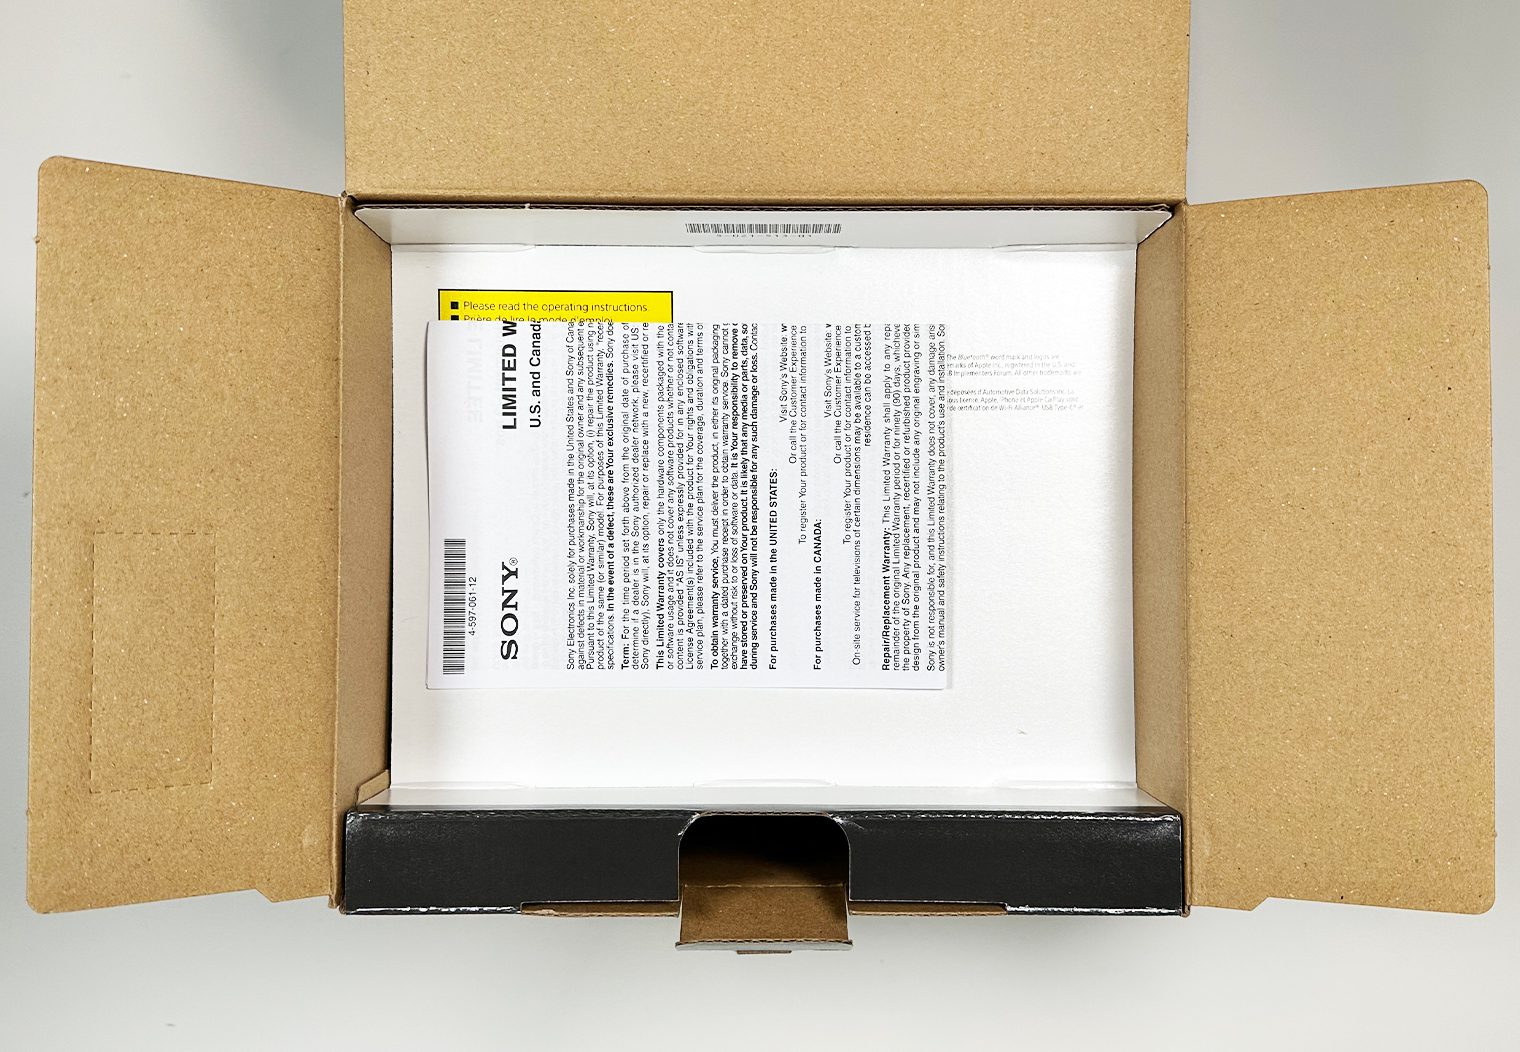 Sony XAV-AX9000 box opening manual on top